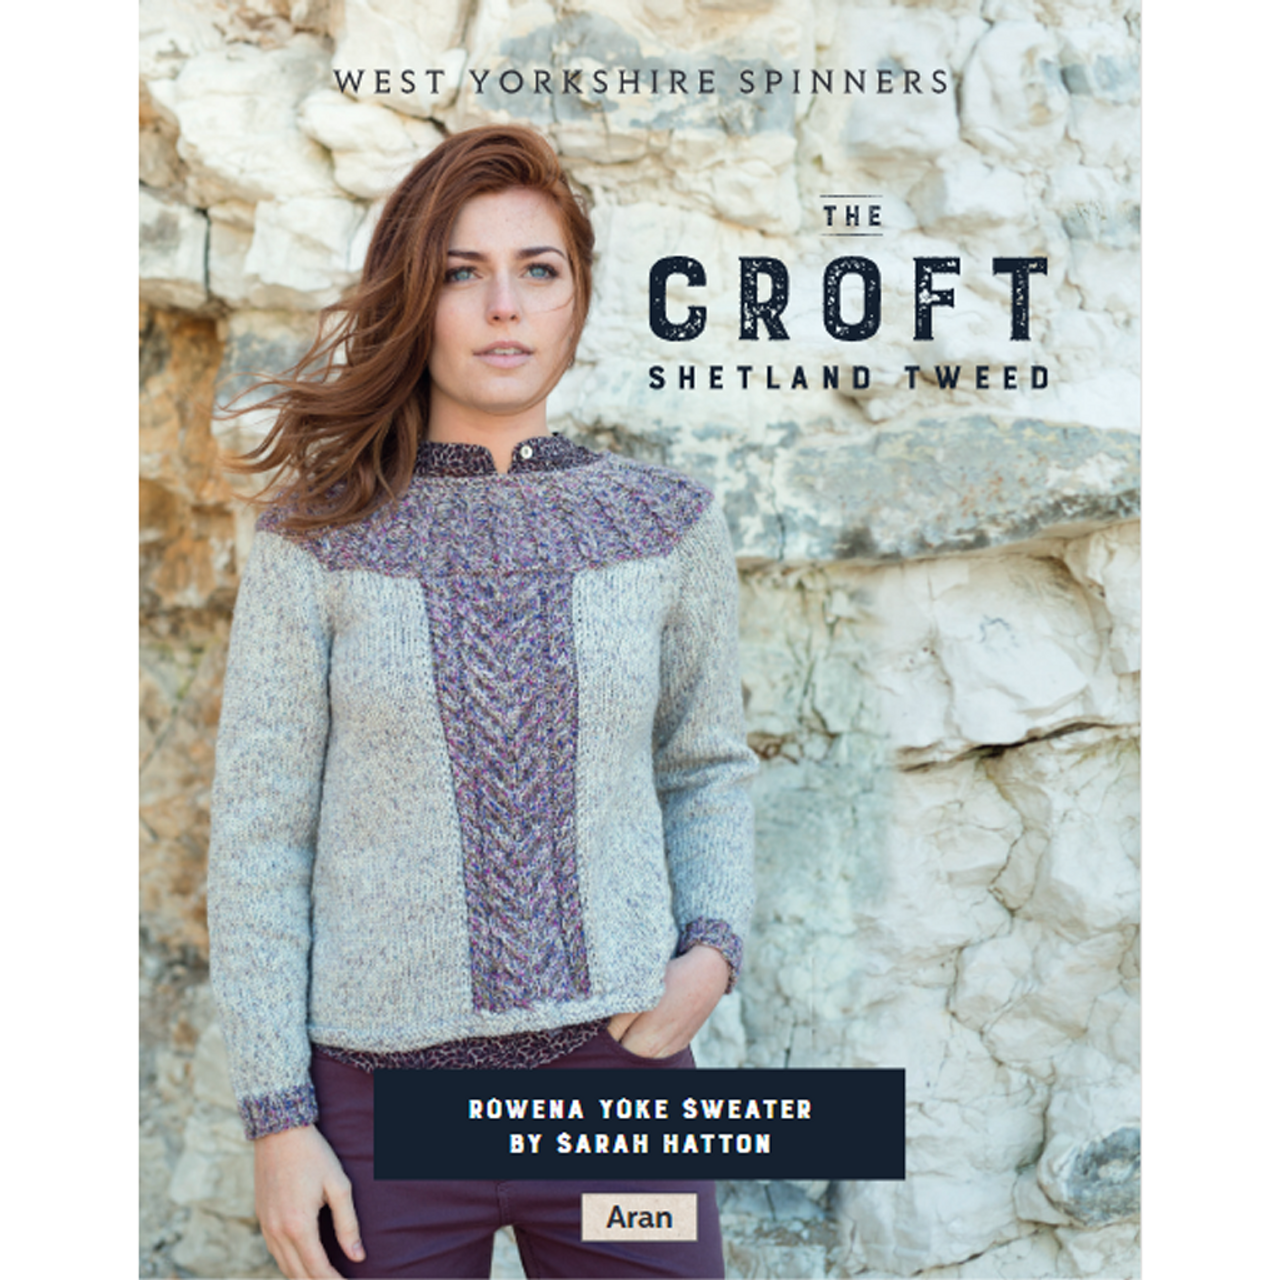 Rowena Yoke Sweater Knitting Pattern, WYS The Croft Aran Knitting Yarn  DBP0066, Digital Download